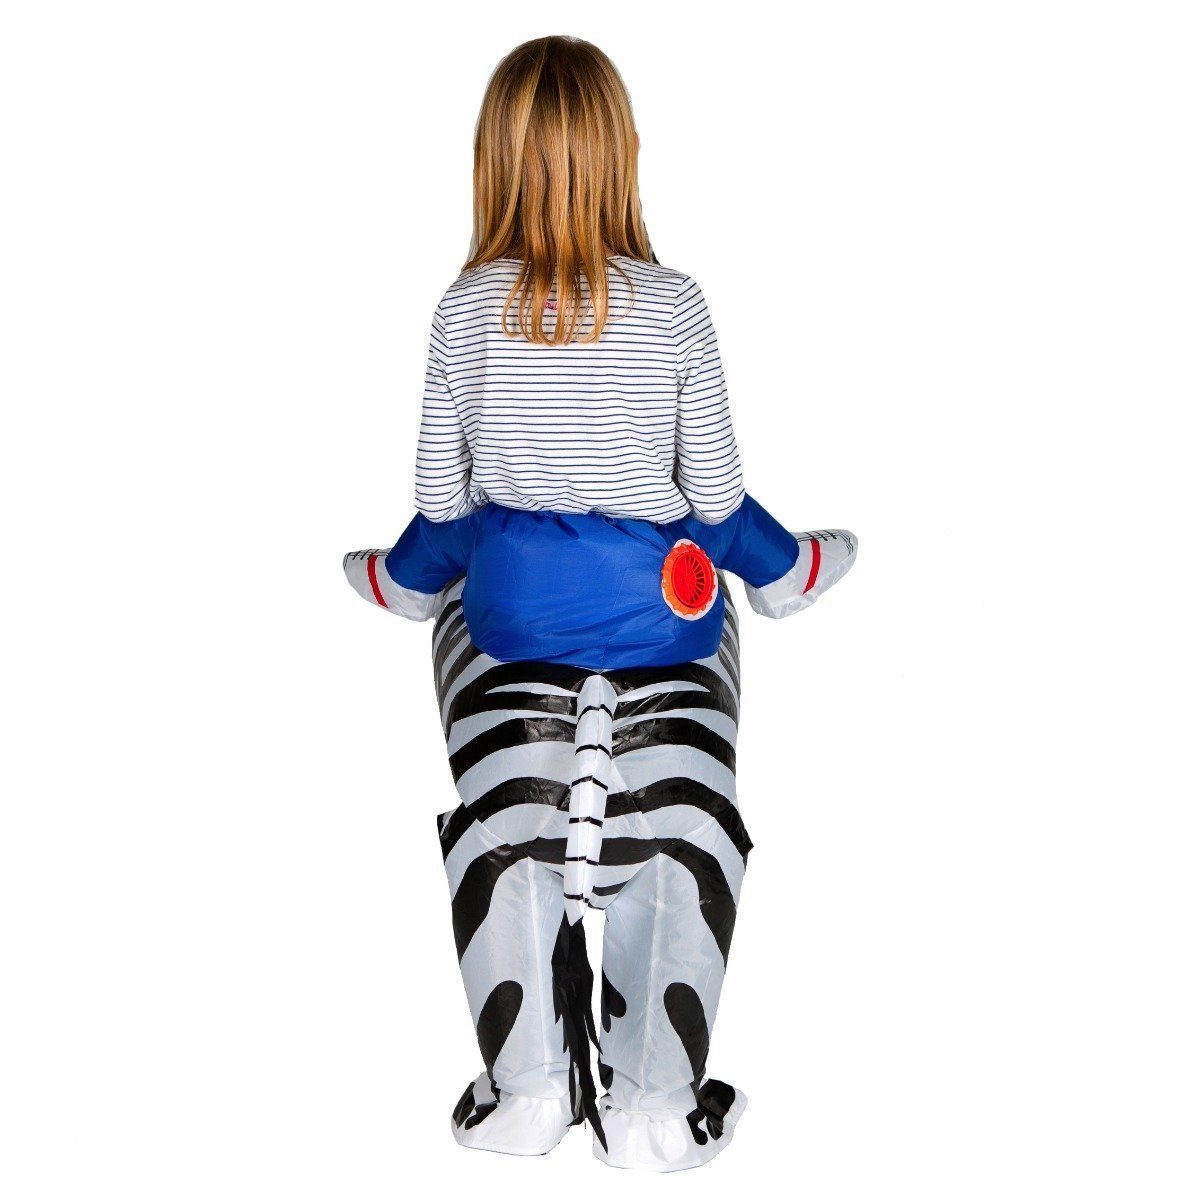 Fancy Dress - Kids Inflatable Zebra Costume